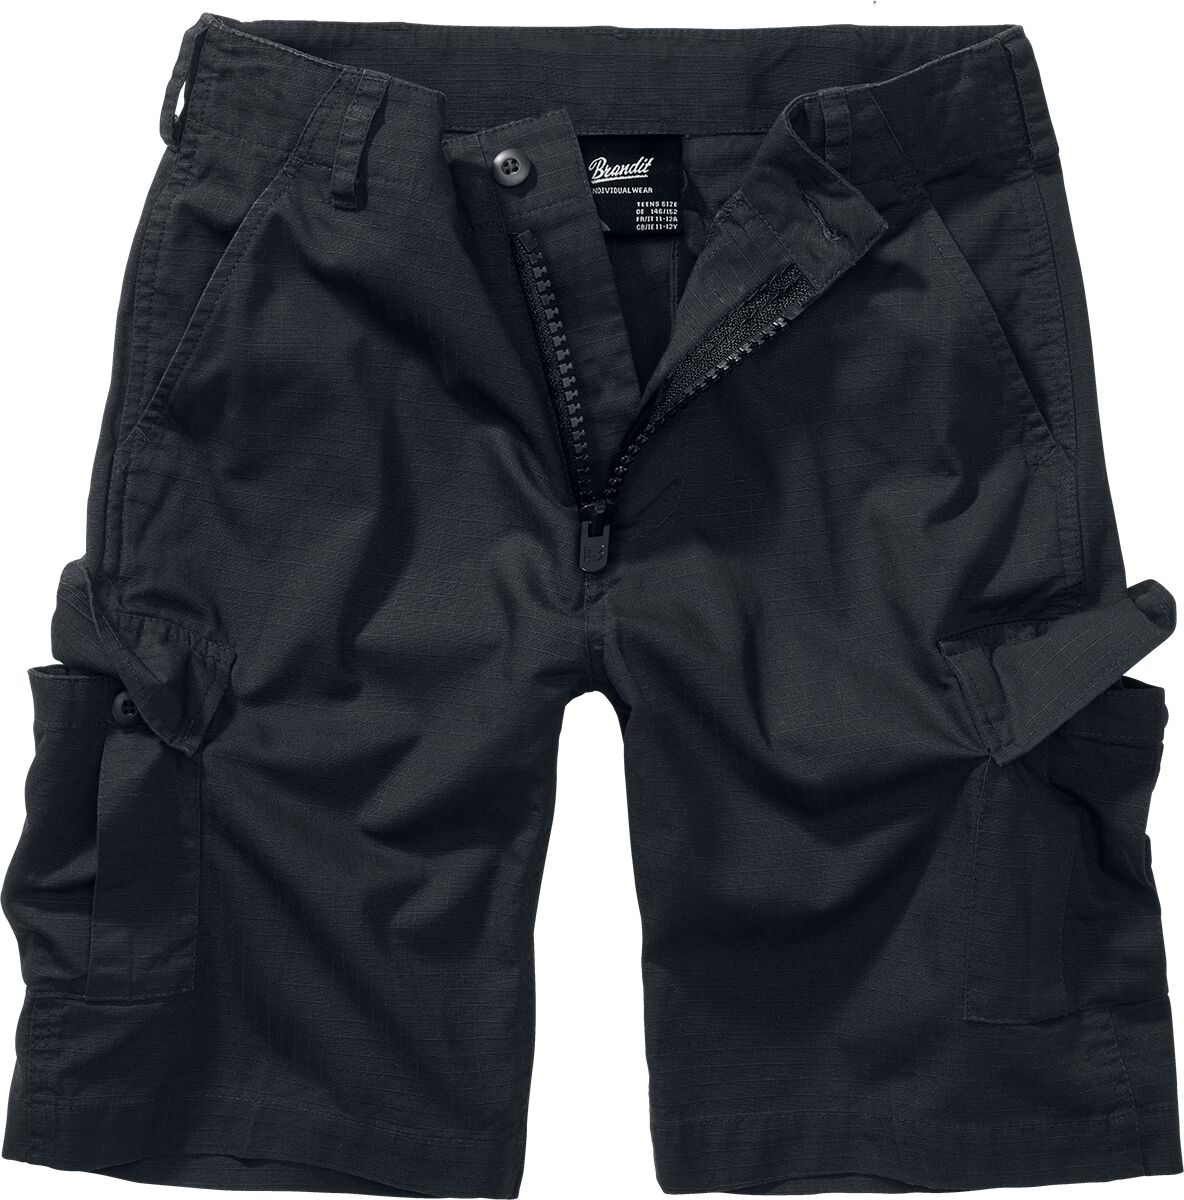 Brandit - Kids BDU Ripstop Shorts - Short - schwarz